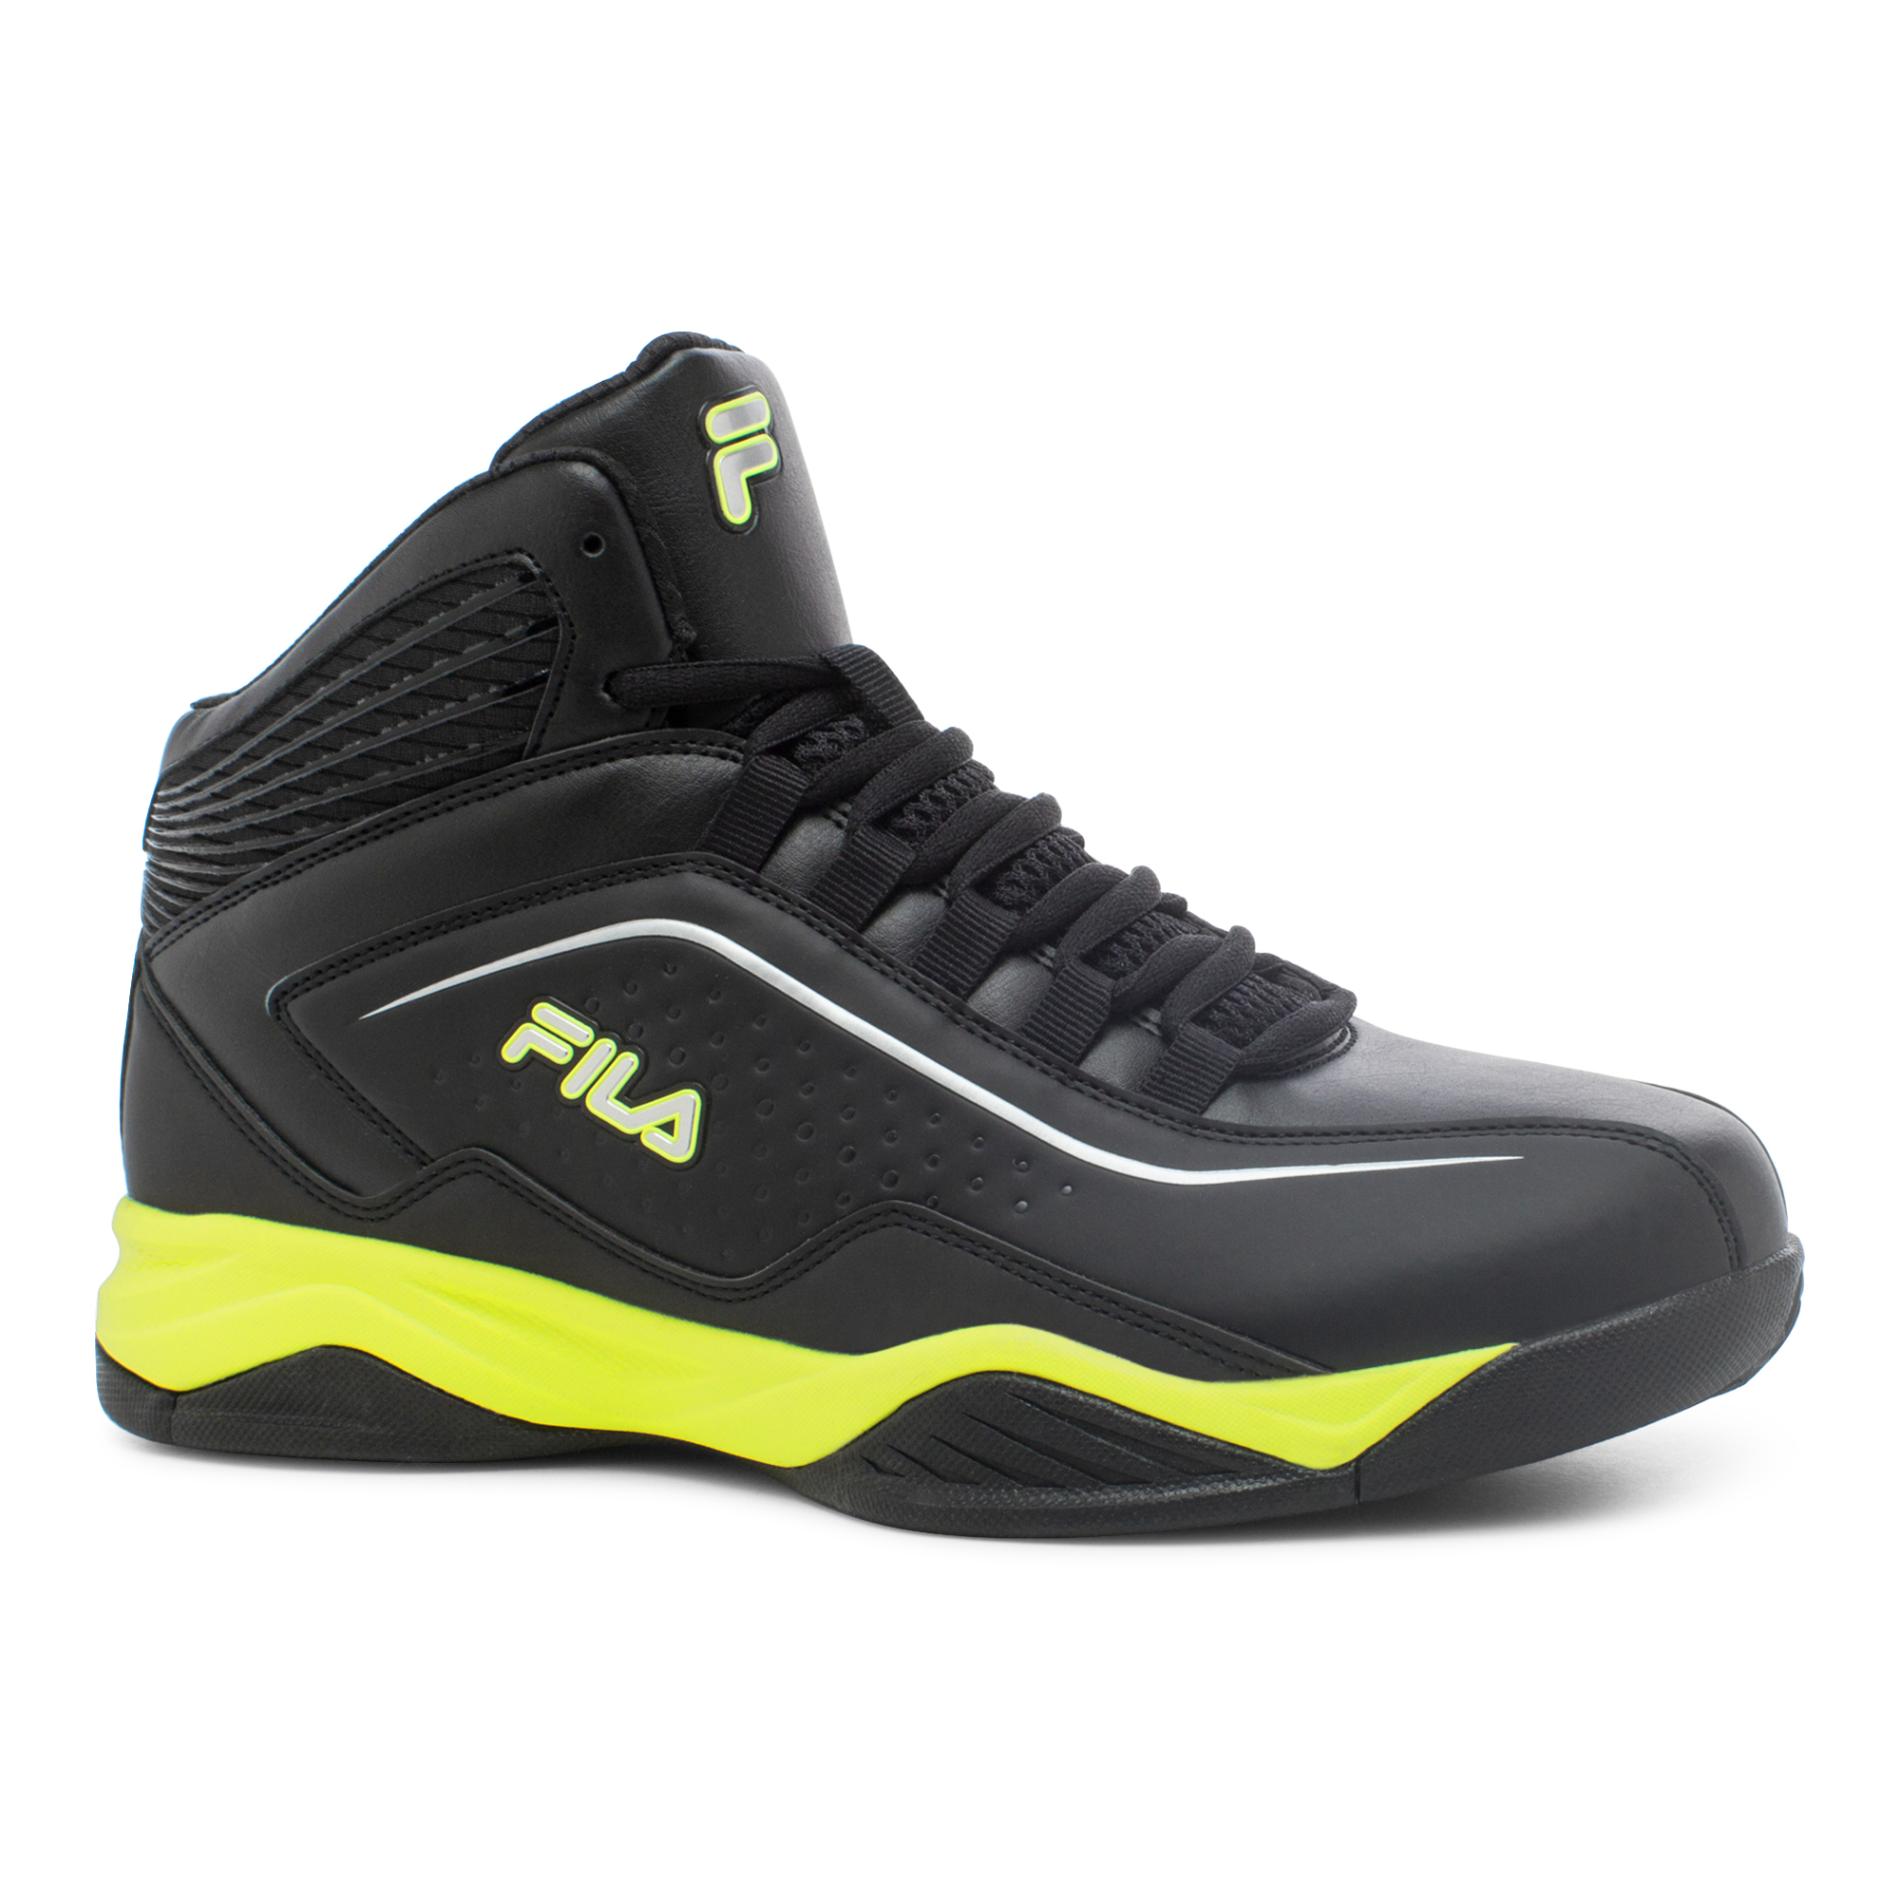  Fila  Men s  Entrapment Basketball  Shoe  Black Yellow 